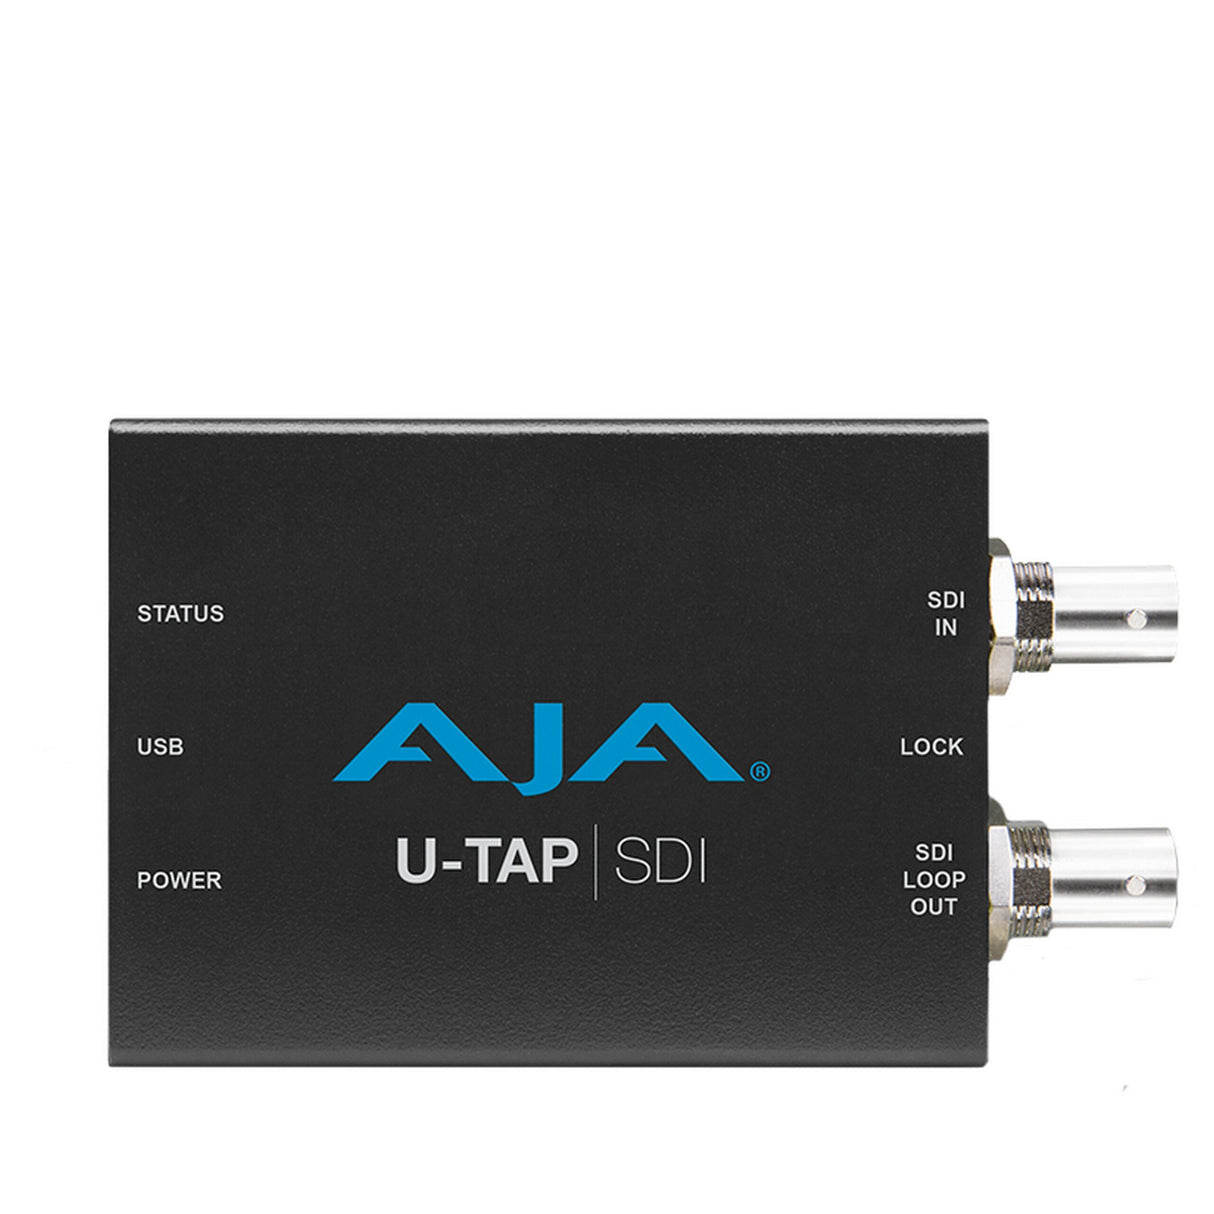 AJA U-TAP-SDI HD/SD USB 3.0 Capture Device for Mac/Windows/Linux